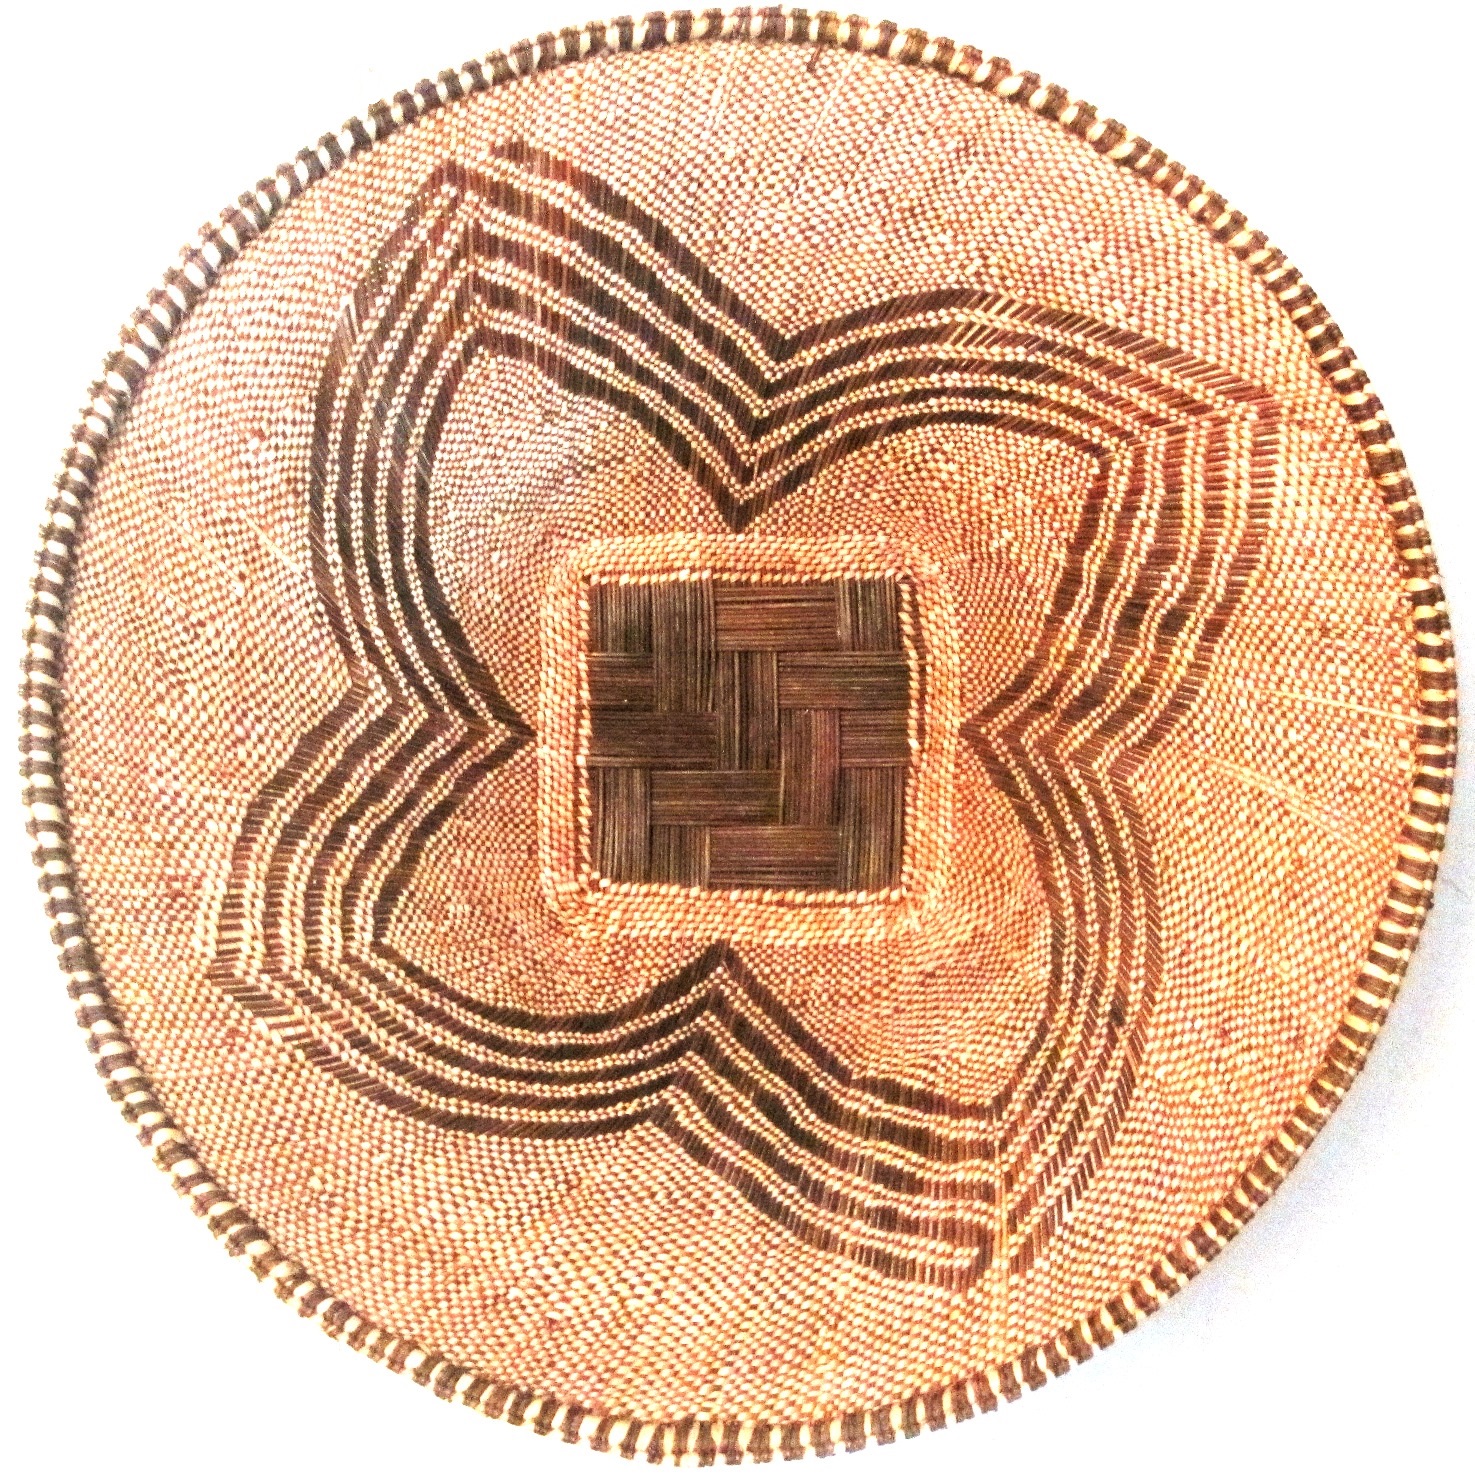 Zambian Plateau Basket - 24 1/2" diameter